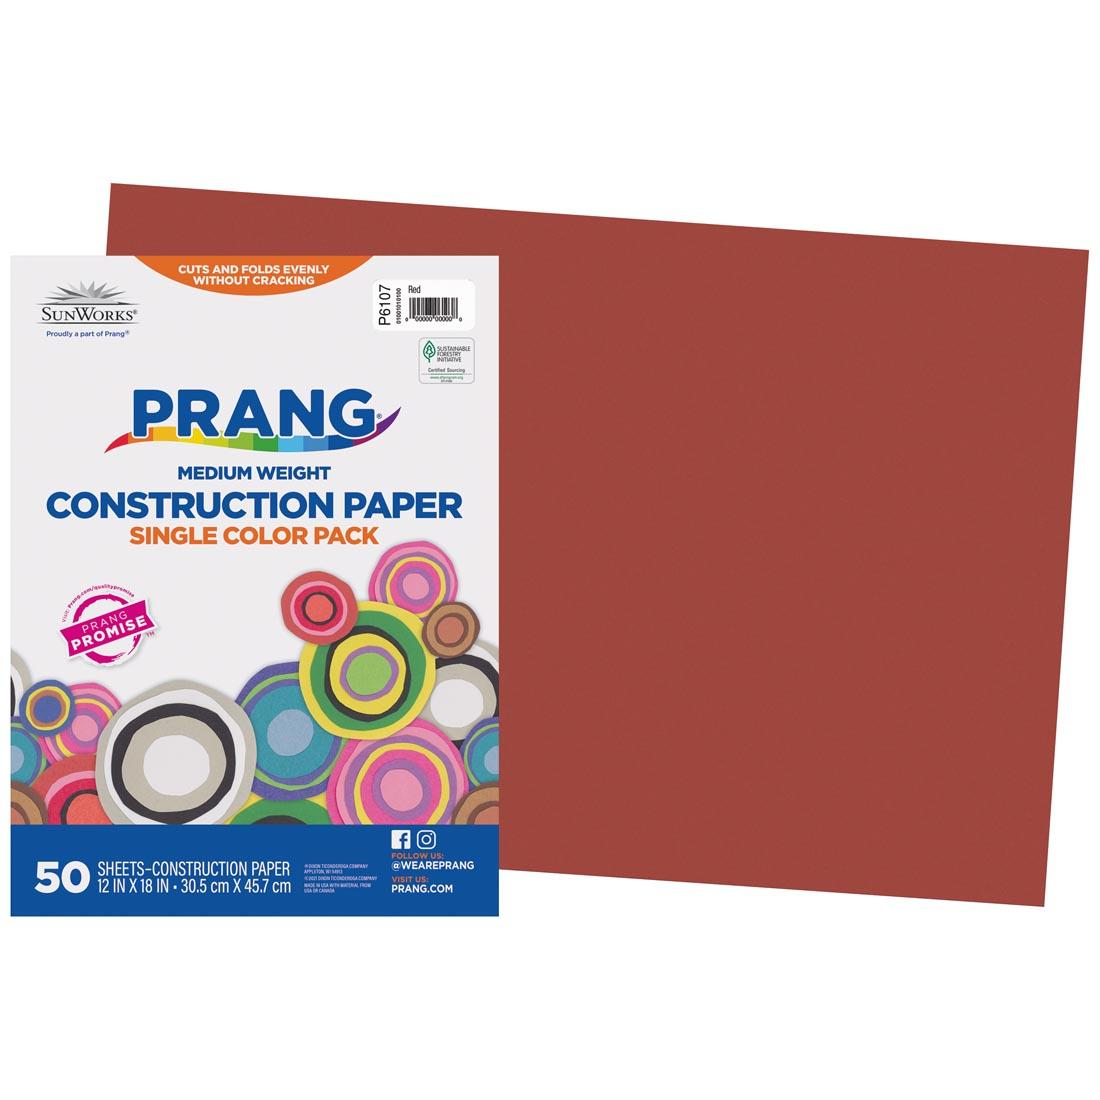 Red Prang/Sunworks Construction Paper